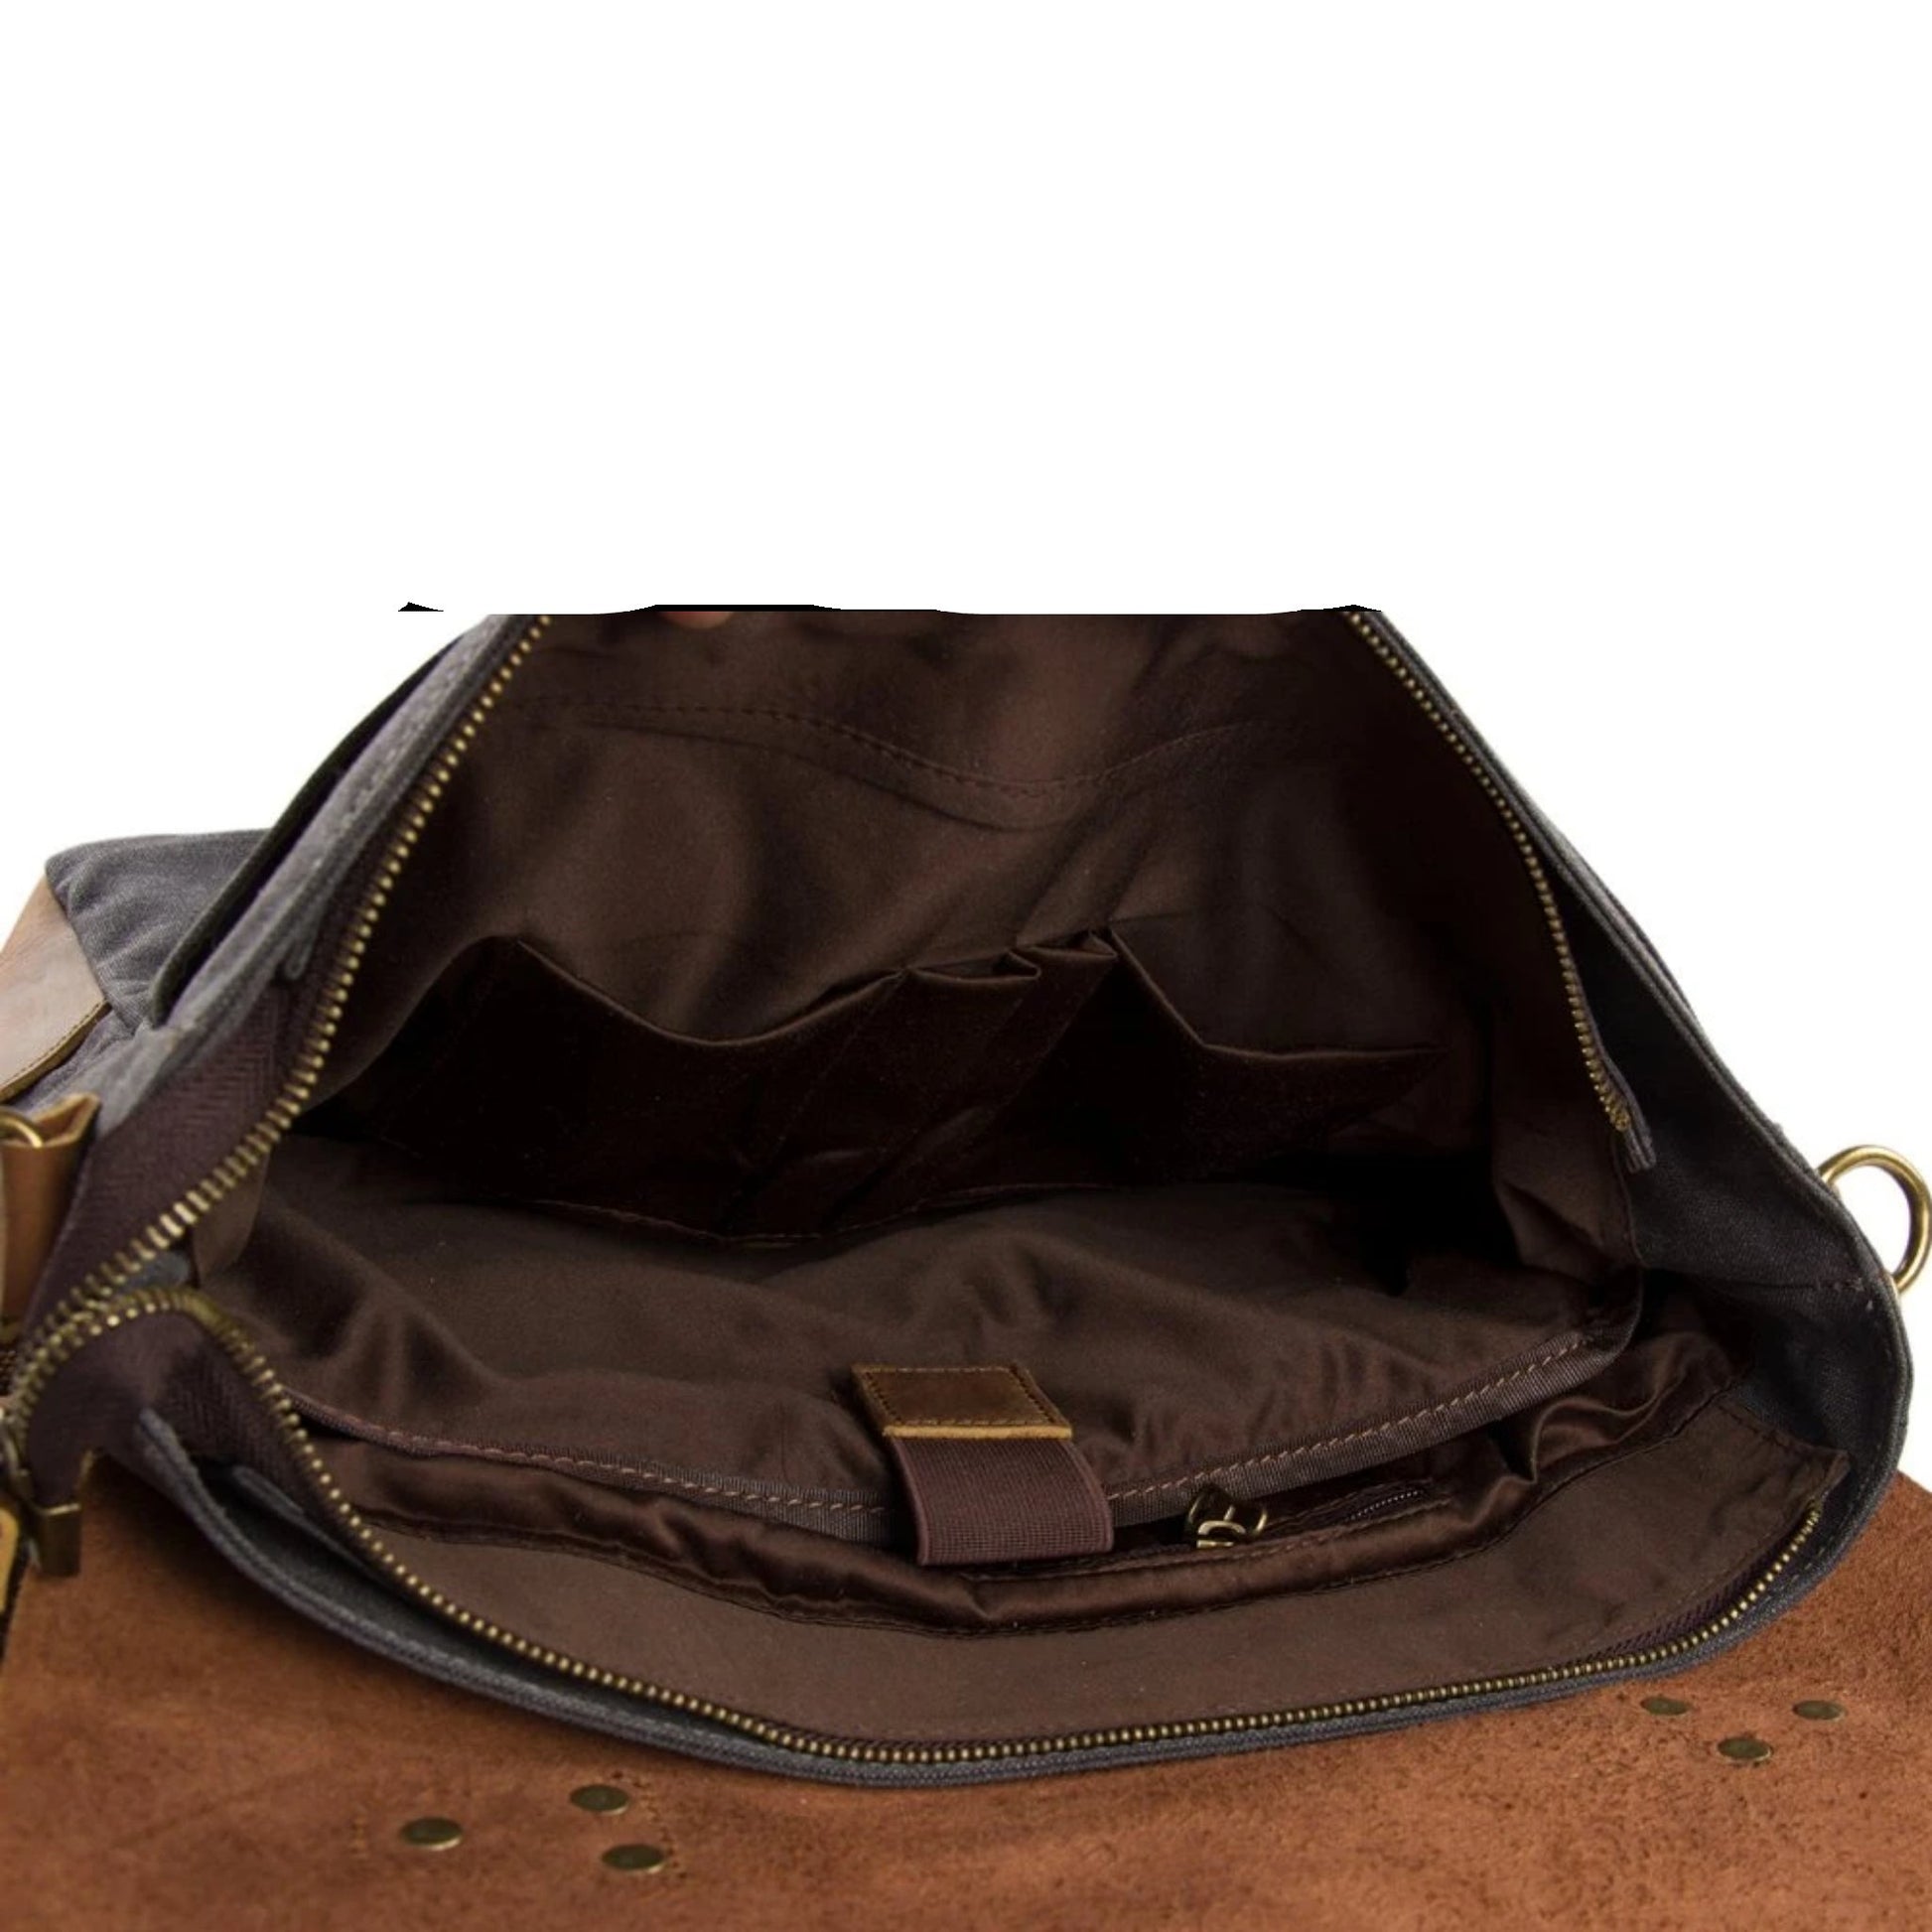 Handmade Waxed Canvas & Leather Satchel Messenger Bag - Dark Grey/Brown - Blue Sebe Handmade Leather Bags